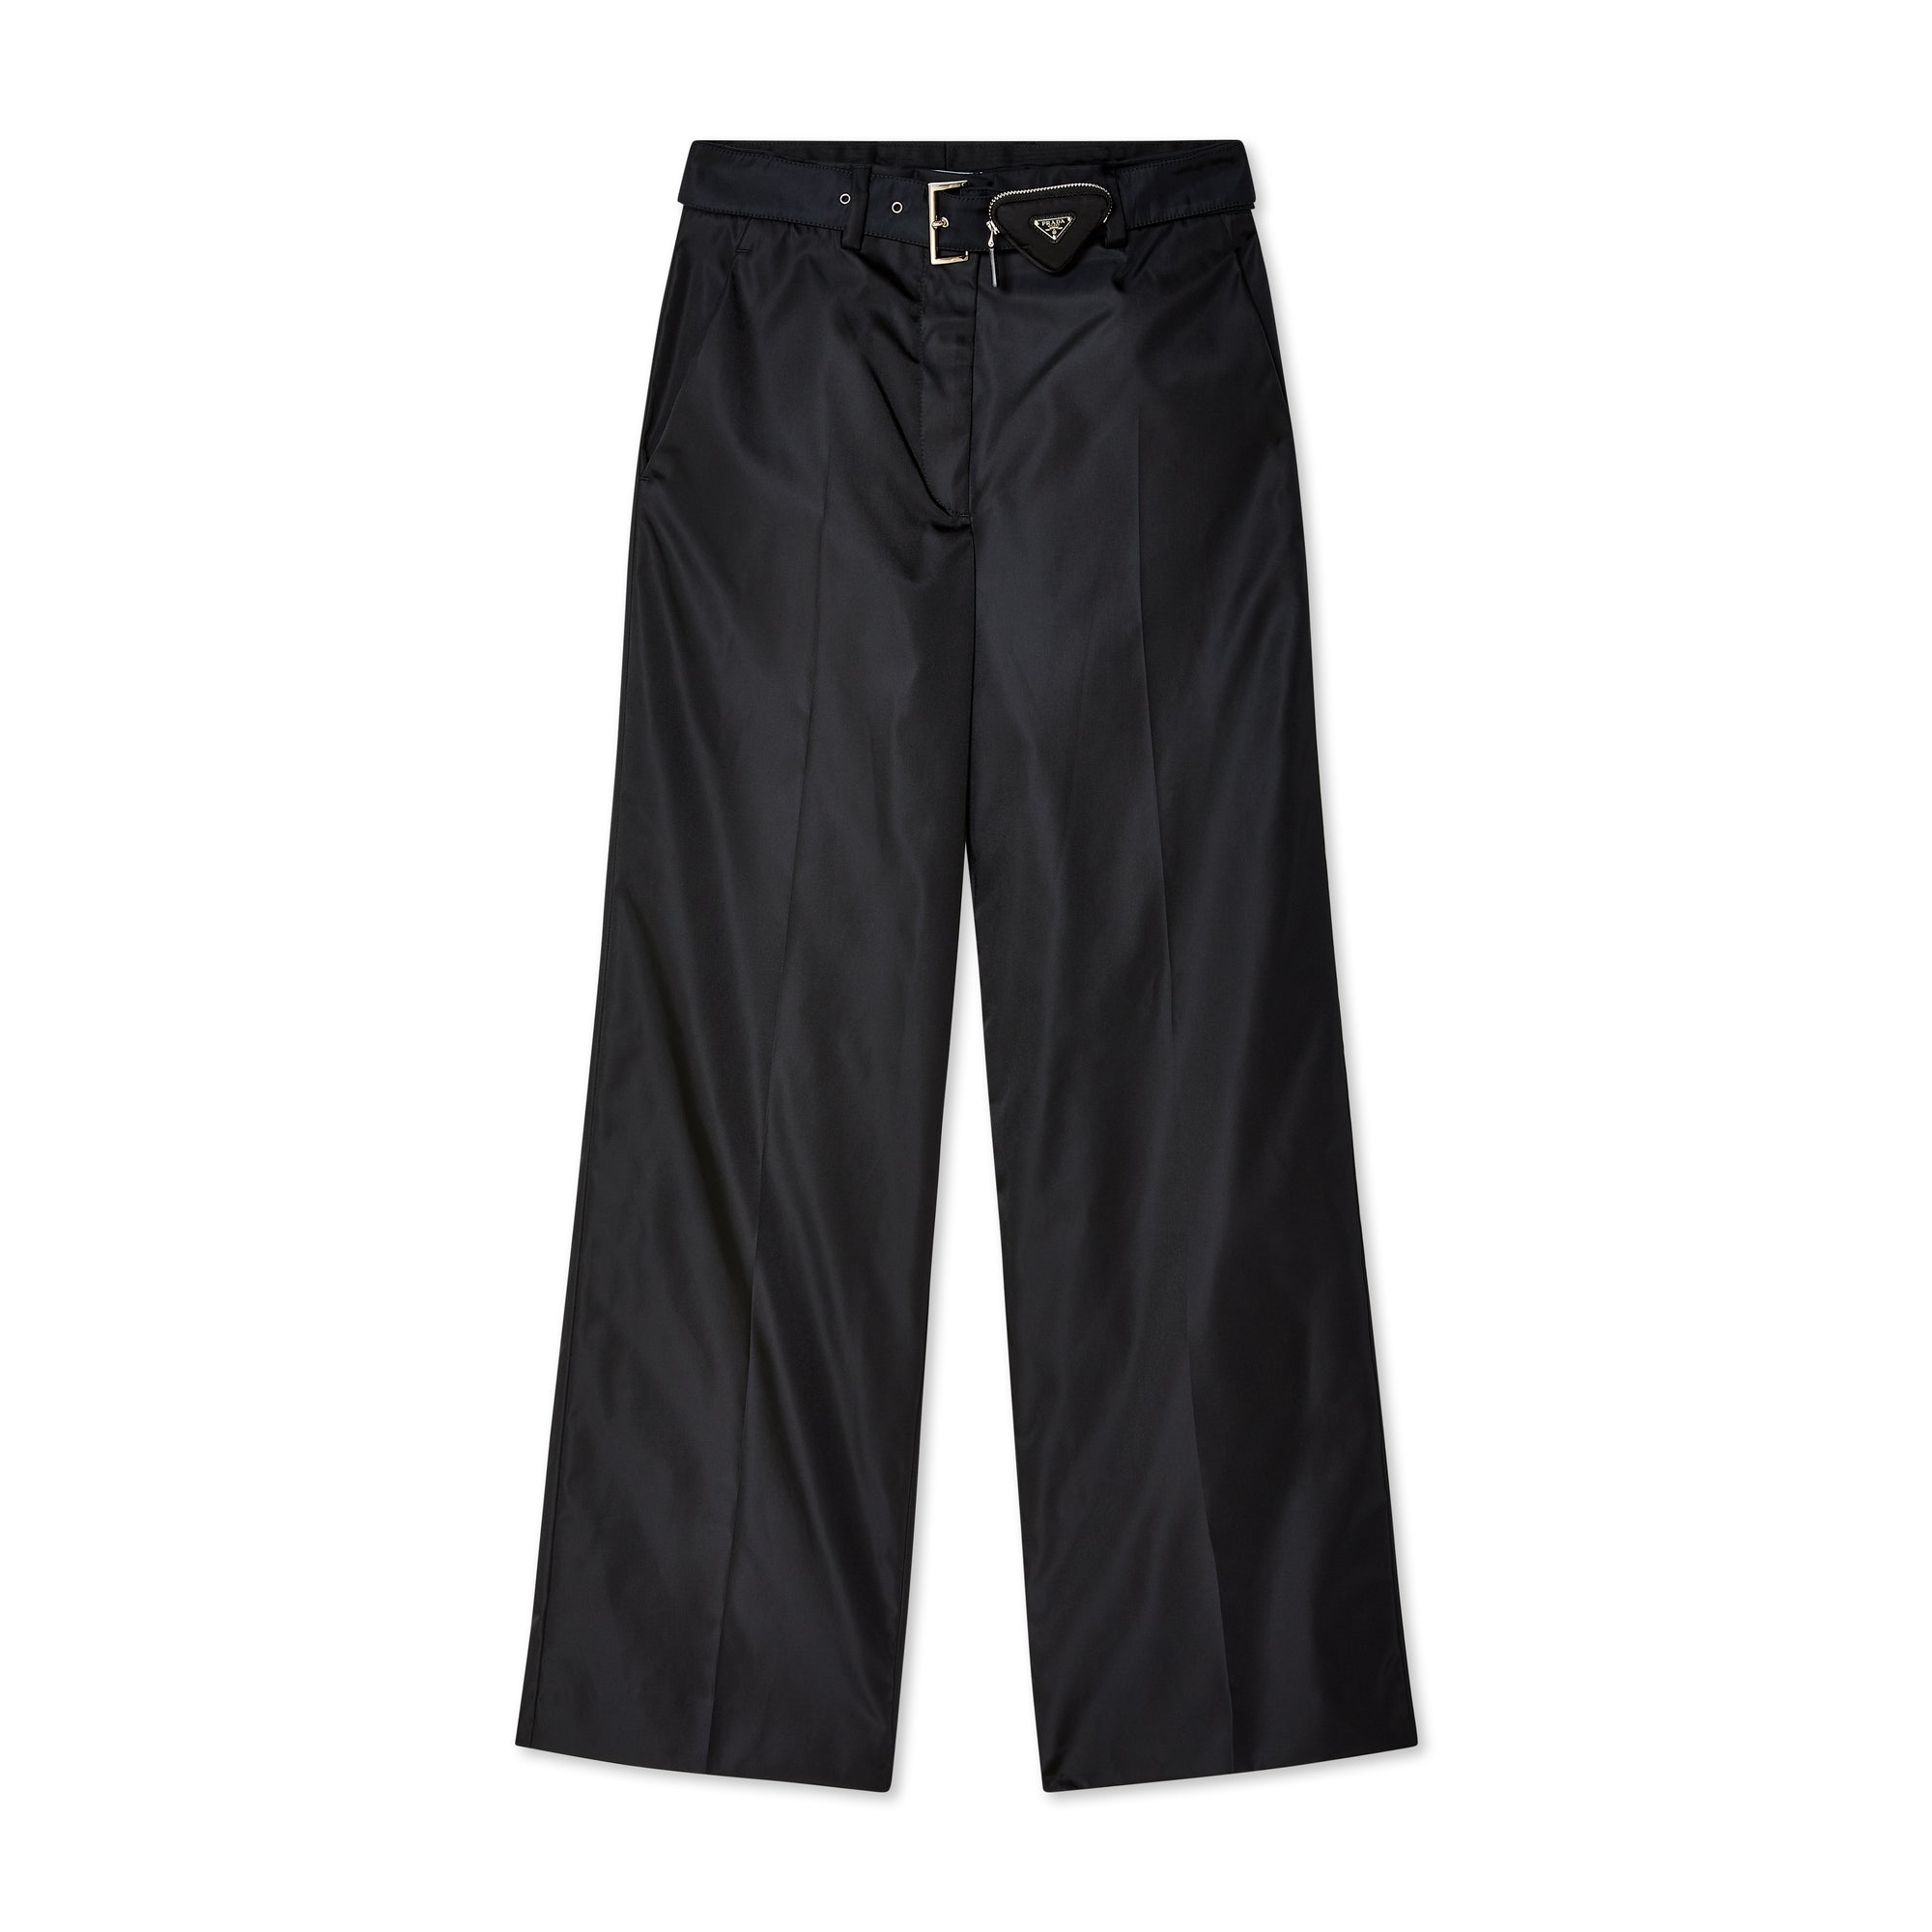 Prada - Women's Pants - (Black) – DSMNY E-SHOP